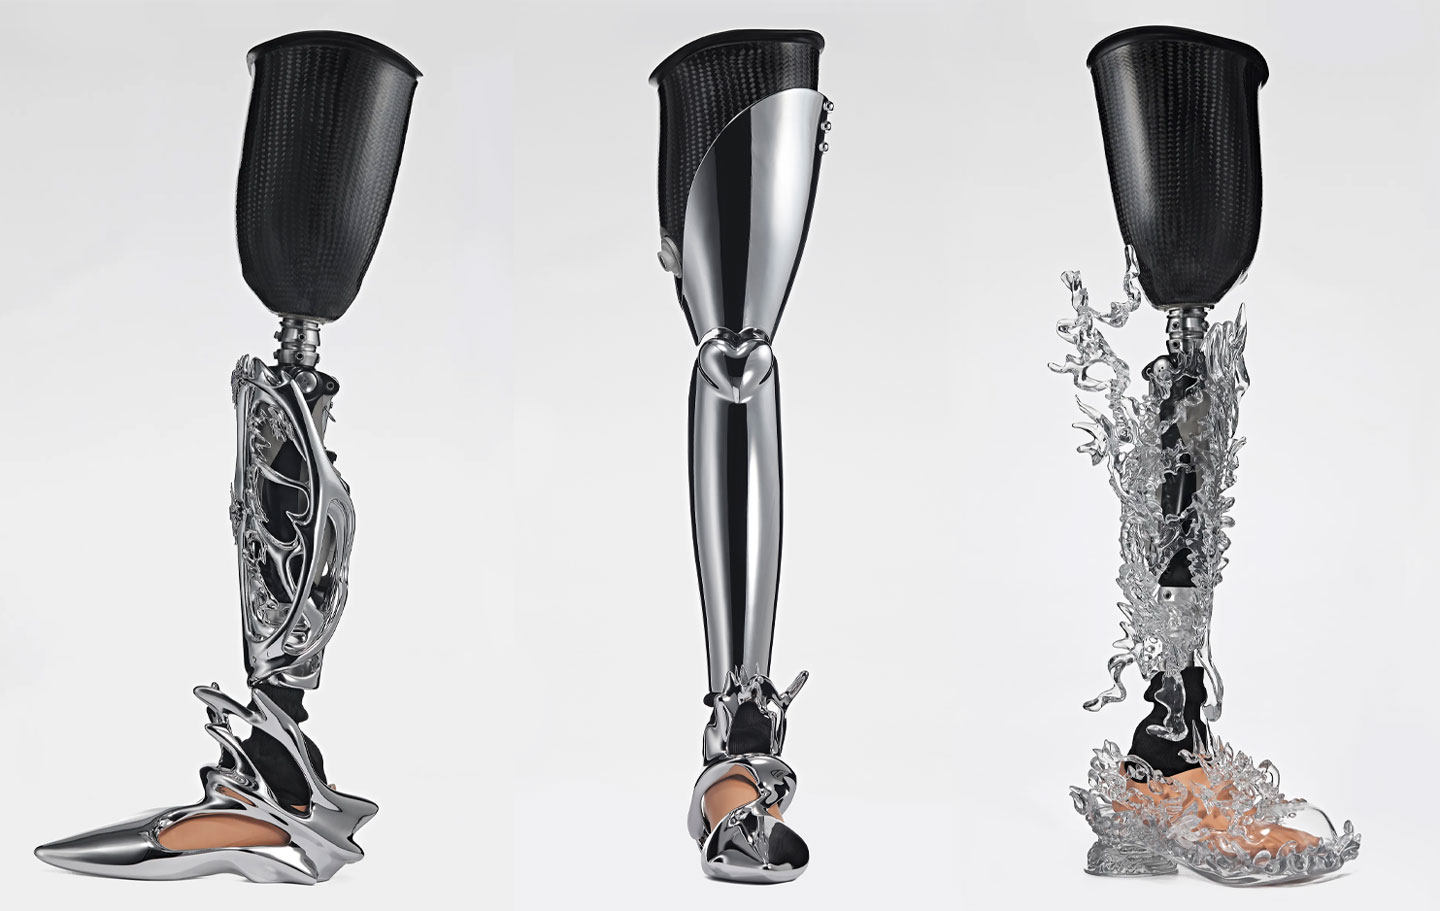 Xiao Yang's prosthetic leg